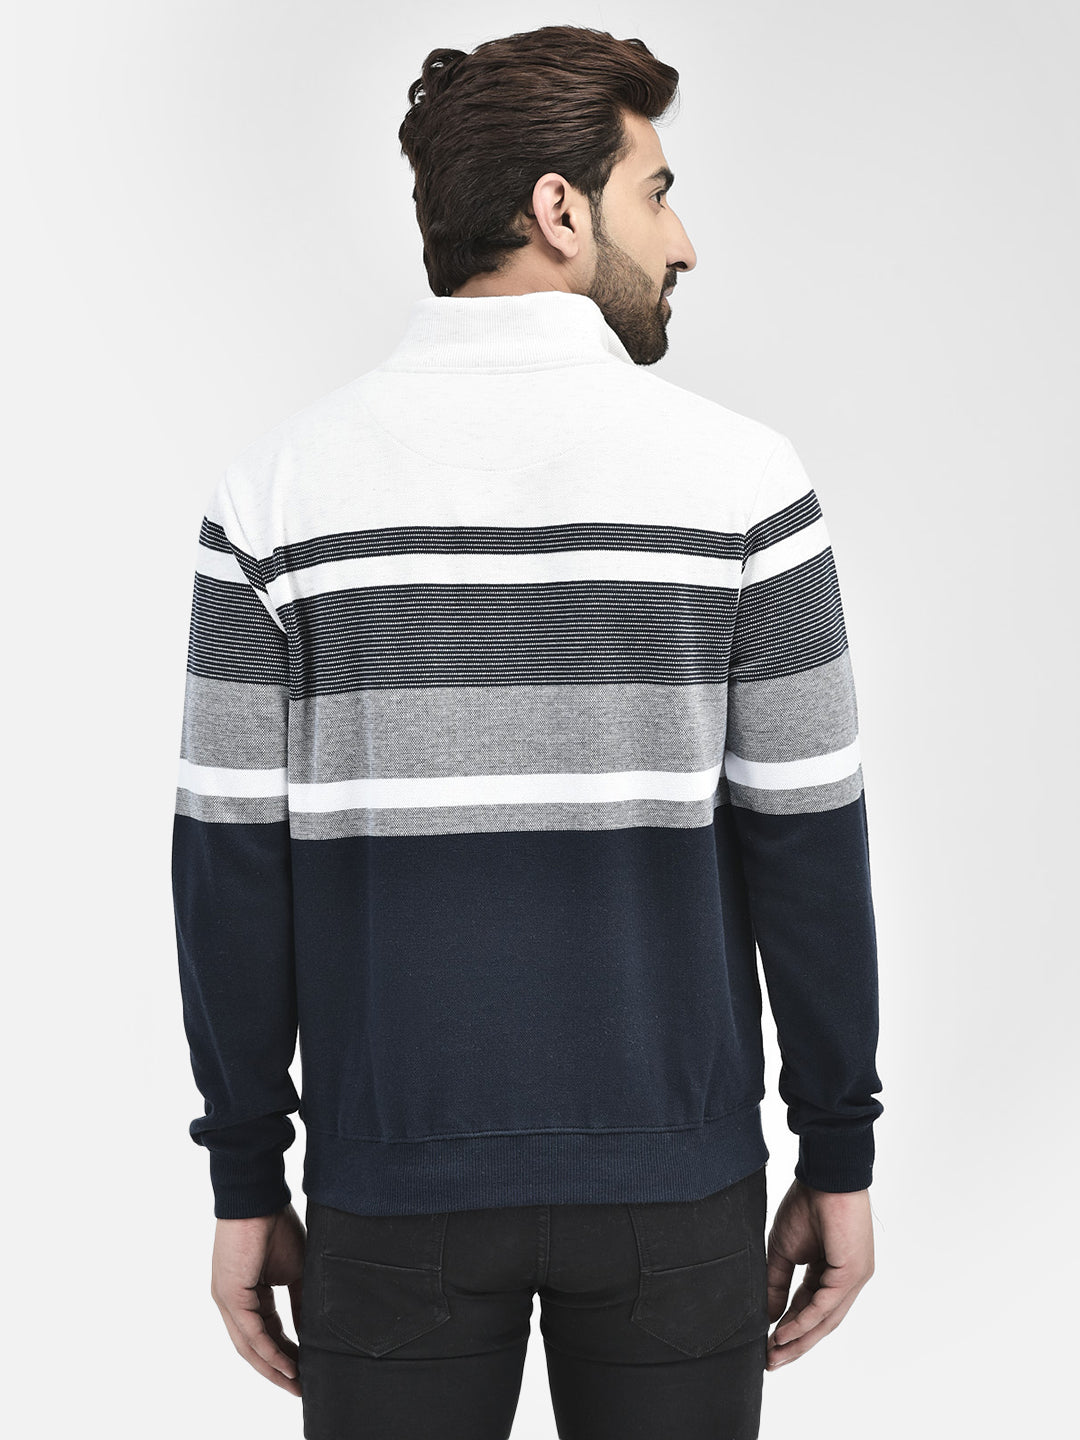 Navy Blue Stripes Sweatshirt.